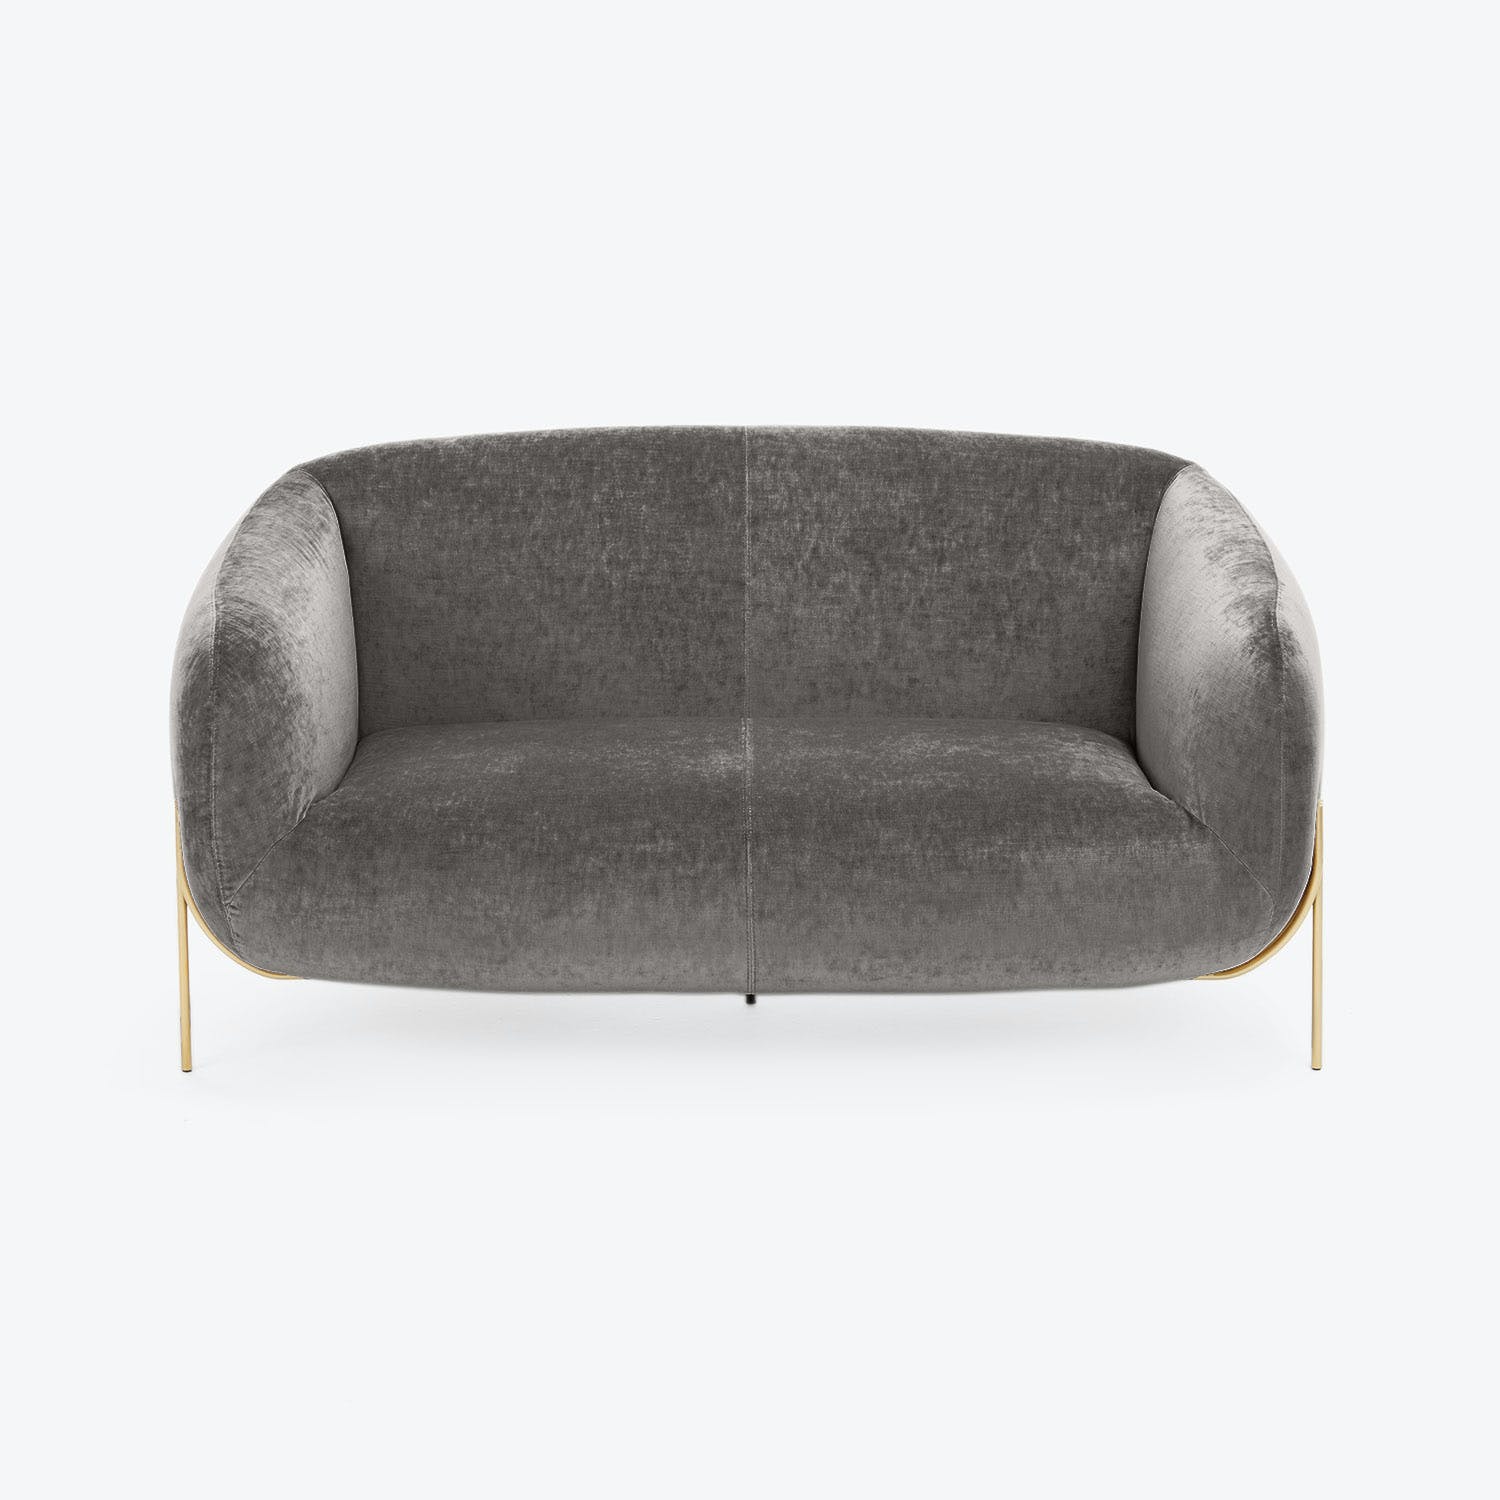 Modern gray sofa with sleek design and elegant golden legs.